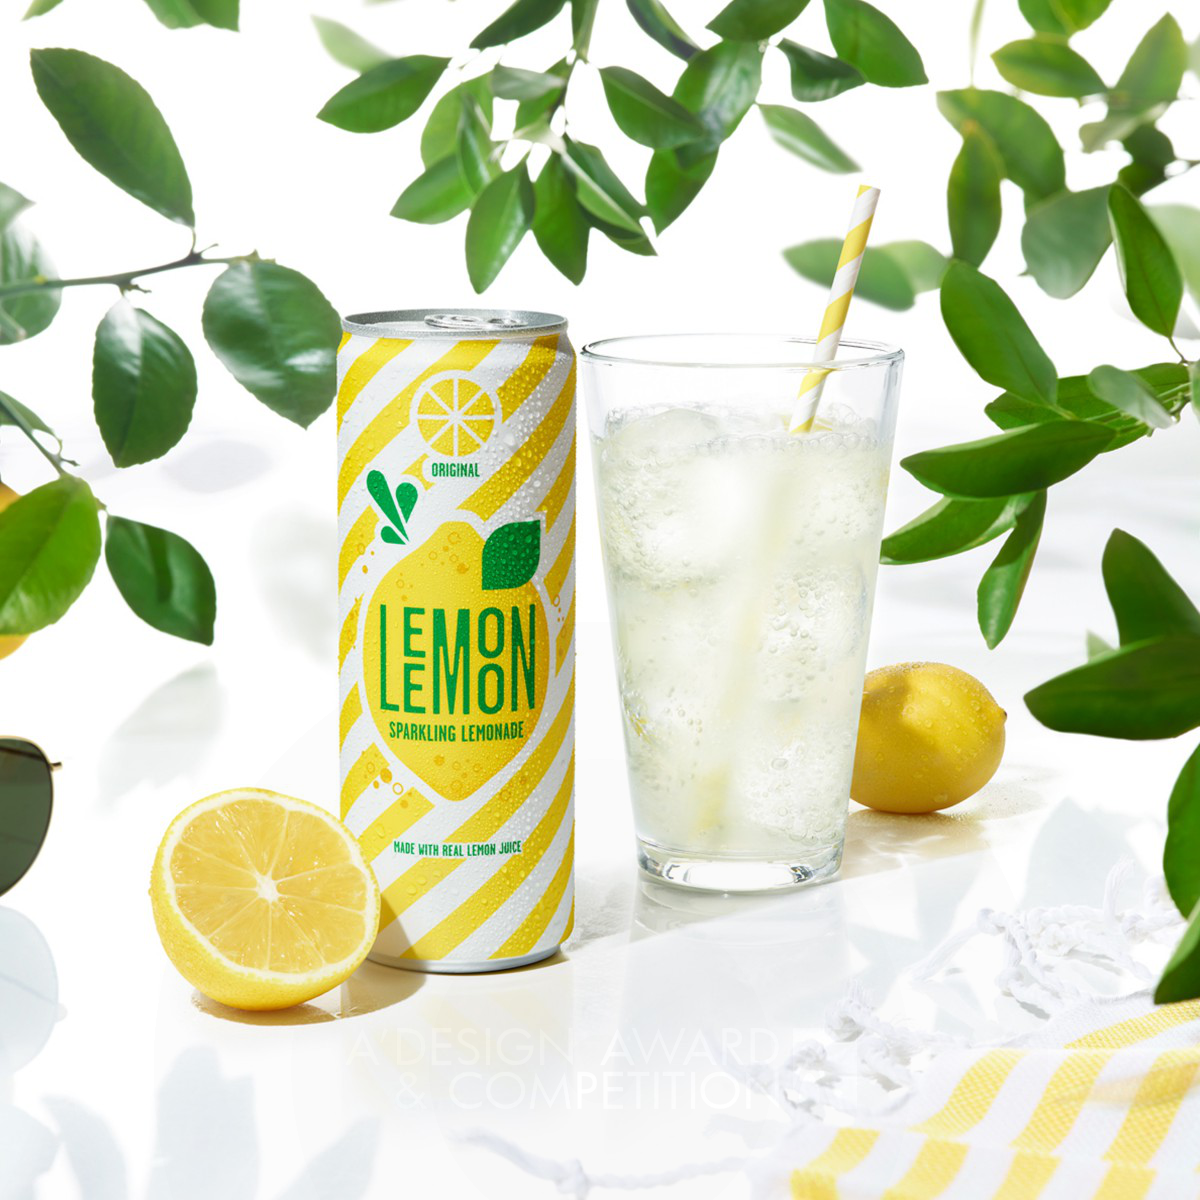 7Up Lemon Lemon Brand Packaging by PepsiCo Design & Innovation Golden Food, Beverage and Culinary Arts Design Award Winner 2018 